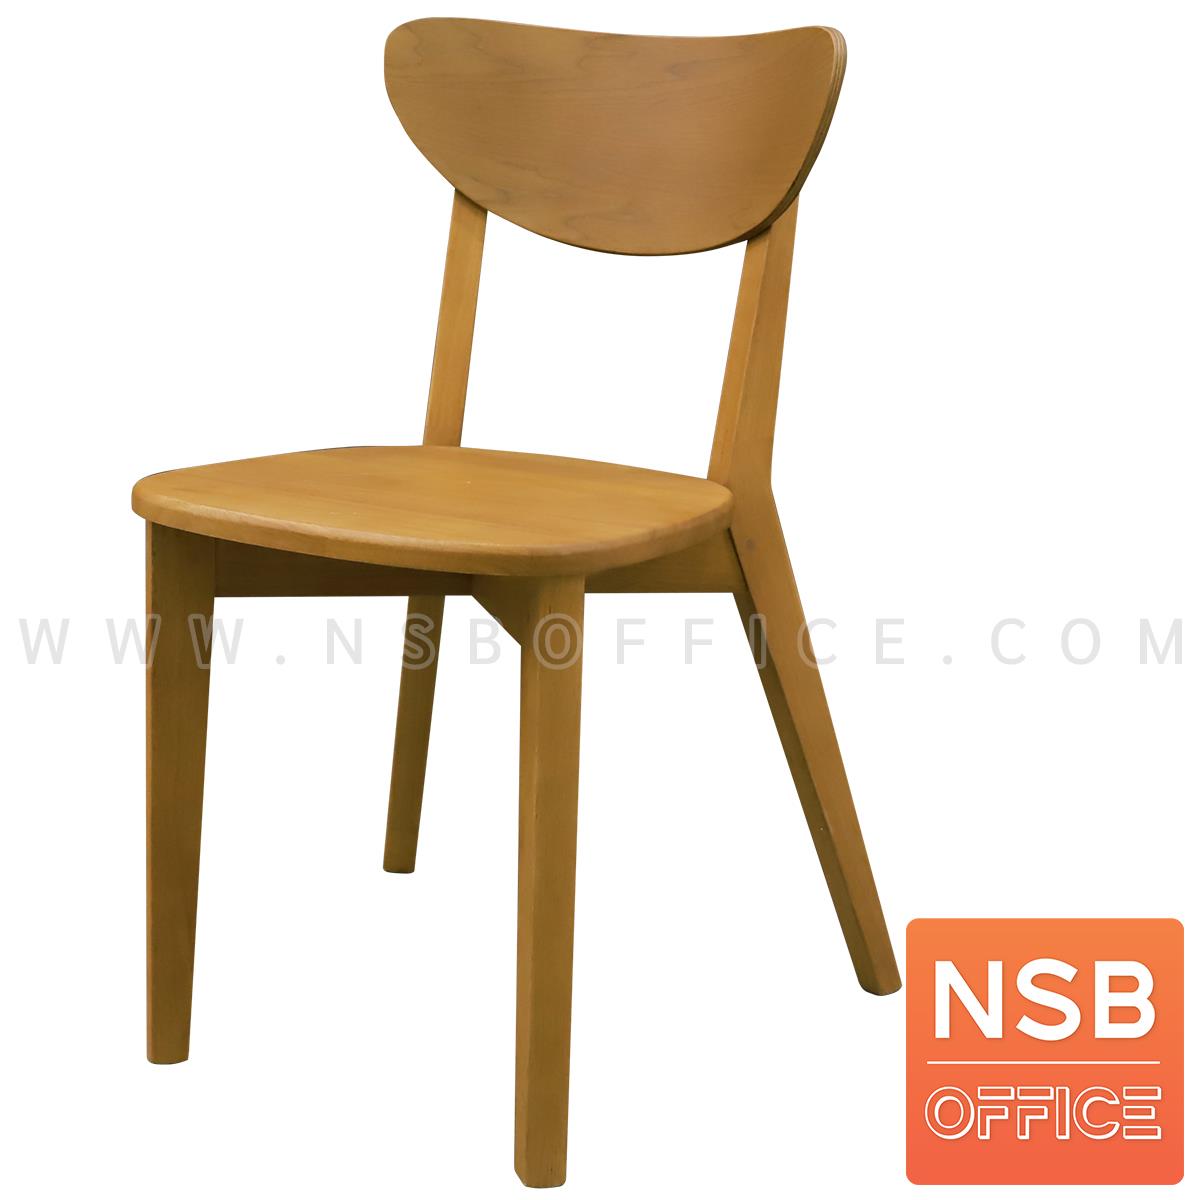 B22A194:เก้าอี้รับประทานอาหาร ขาไม้จริง  รุ่น Brownstone (บลาวน์สโตน)  ที่นั่งไม้ยางพารา